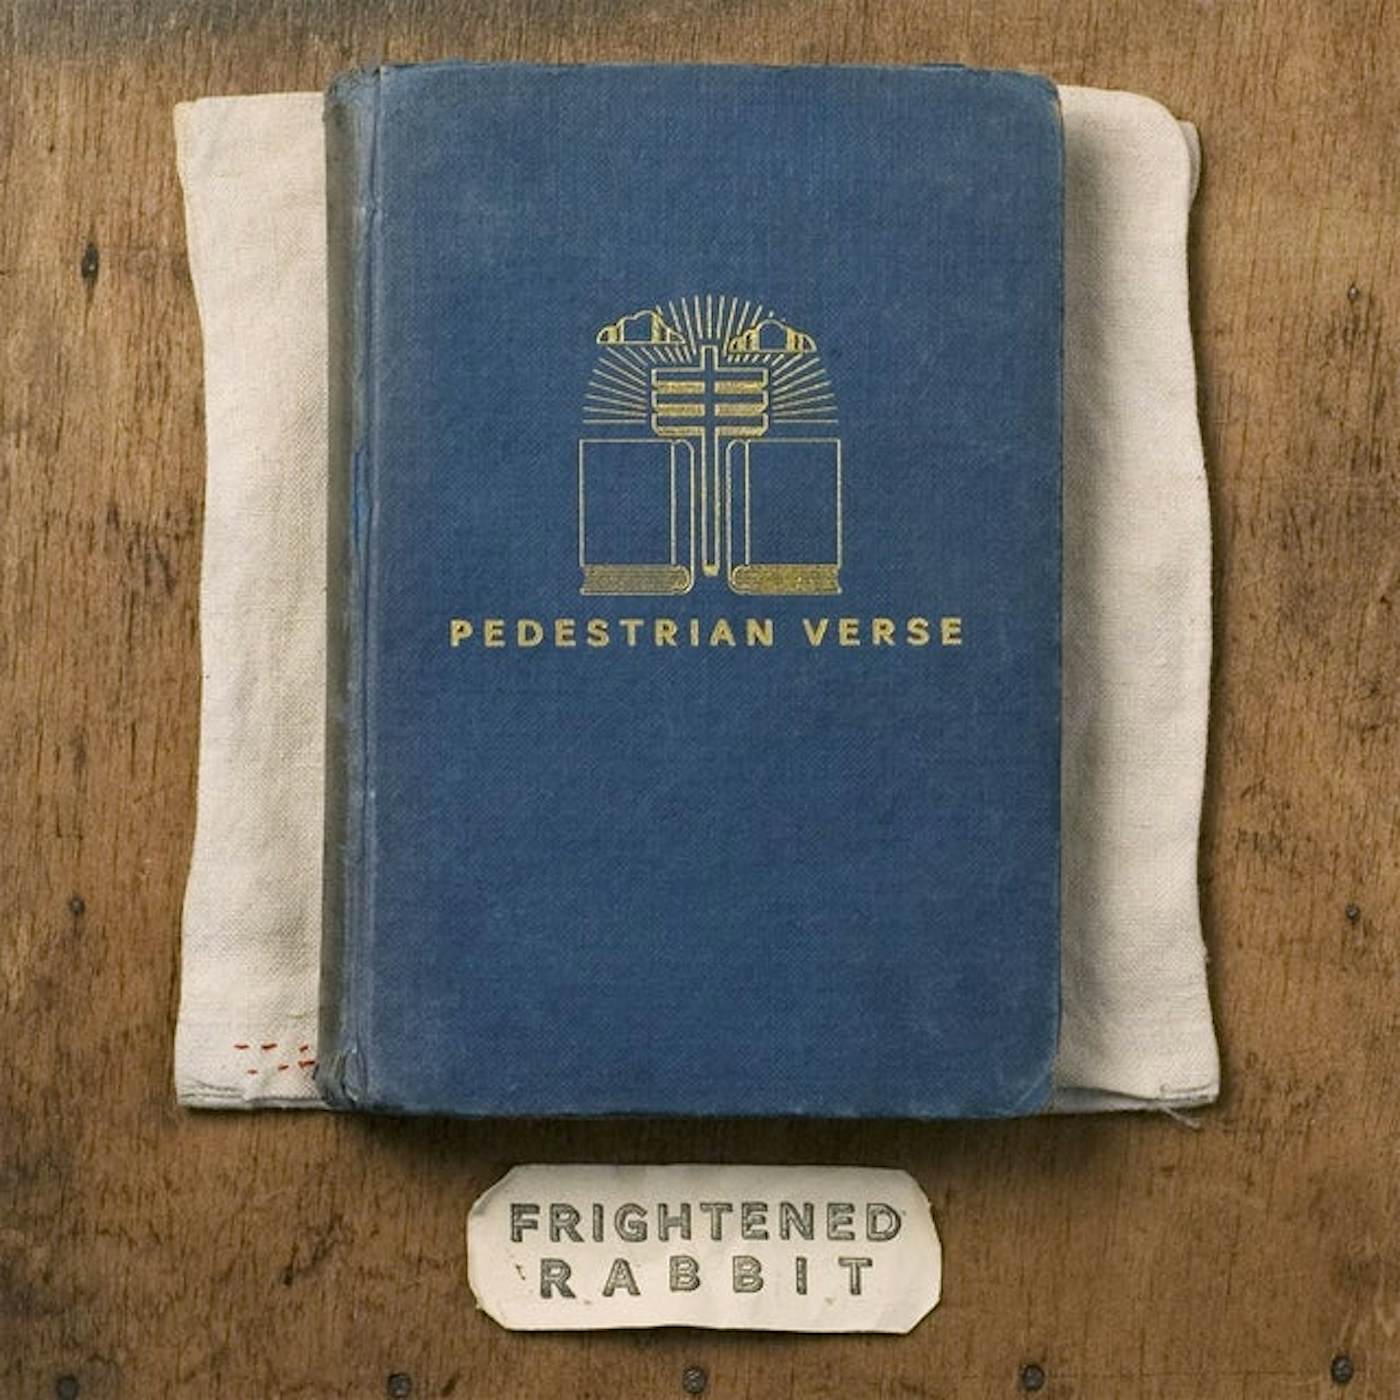 Frightened Rabbit Pedestrian Verse Vinyl Record